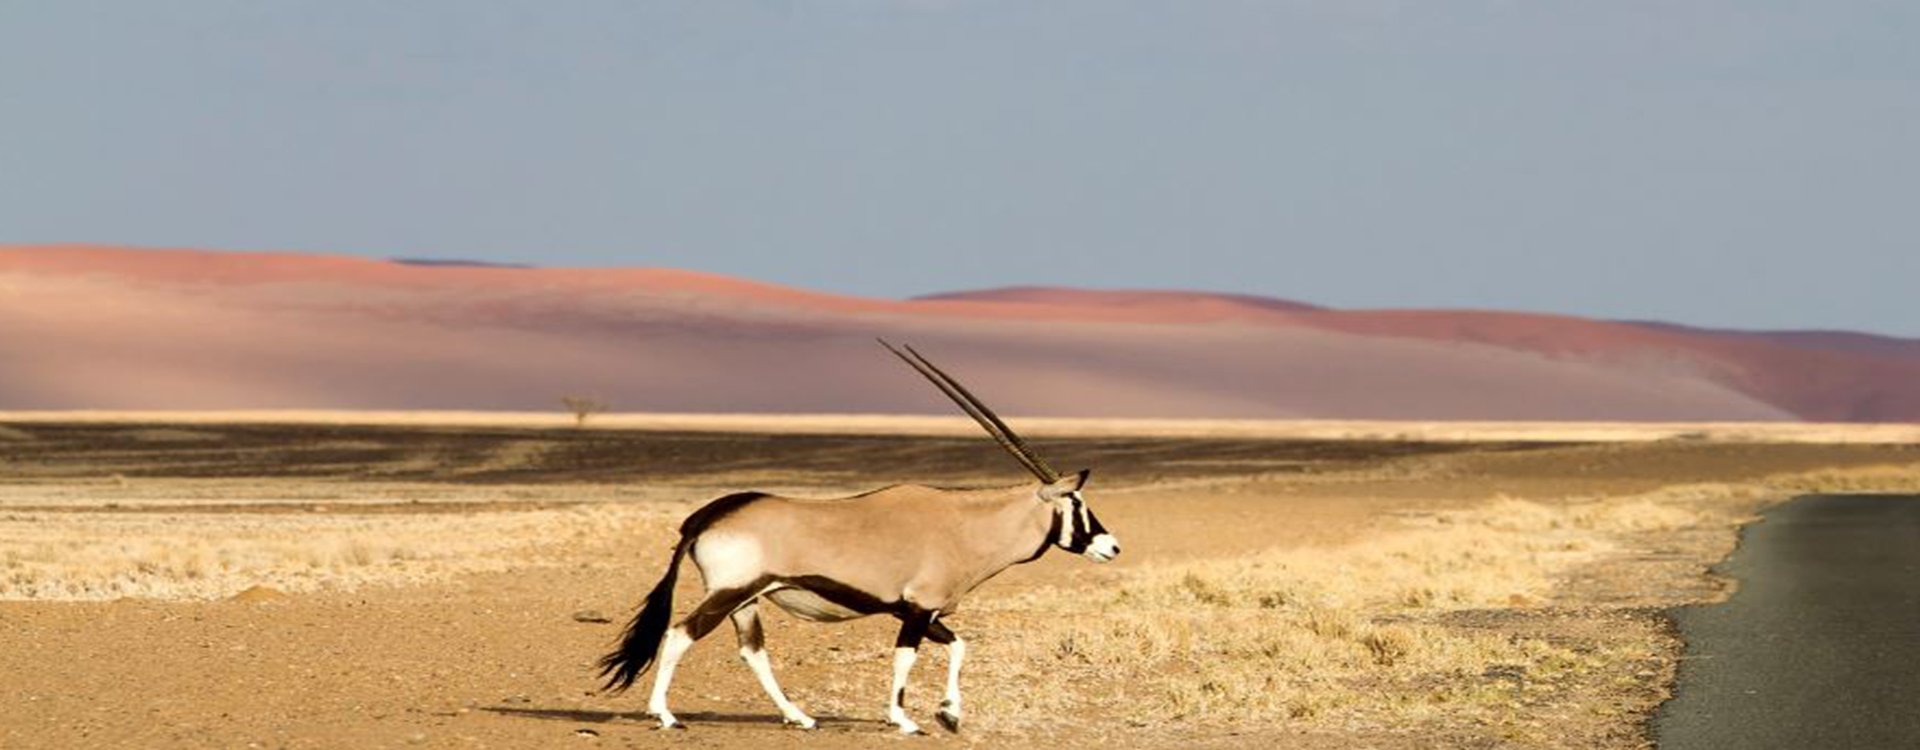 Namibia_Sossusvlei_an oryx crossing_iStock_000054700162_resized